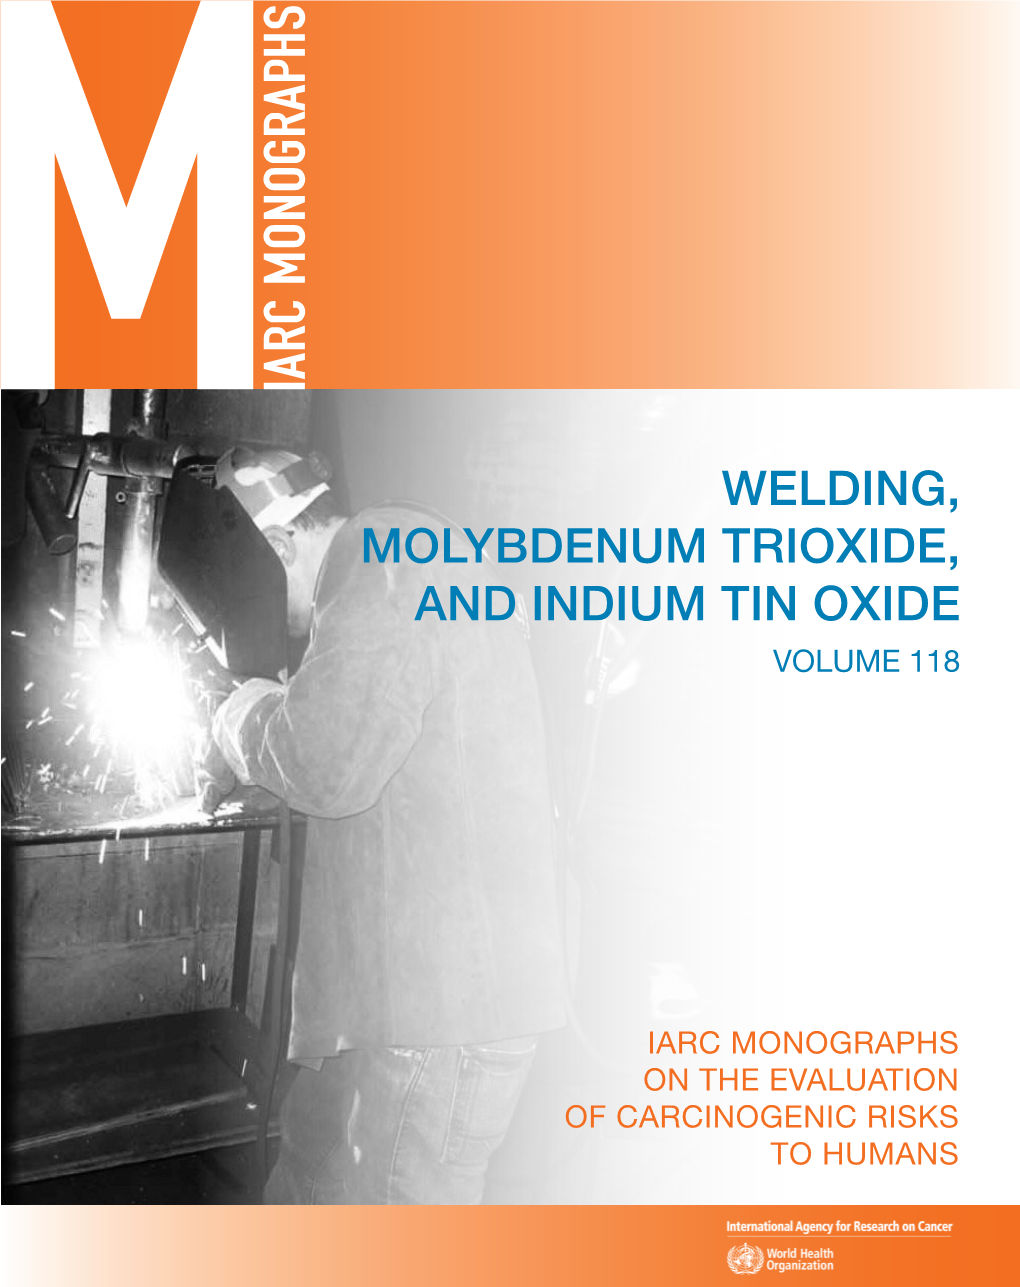 Welding, Molybdenum Trioxide, and Indium Tin Oxide (IARC Monograph